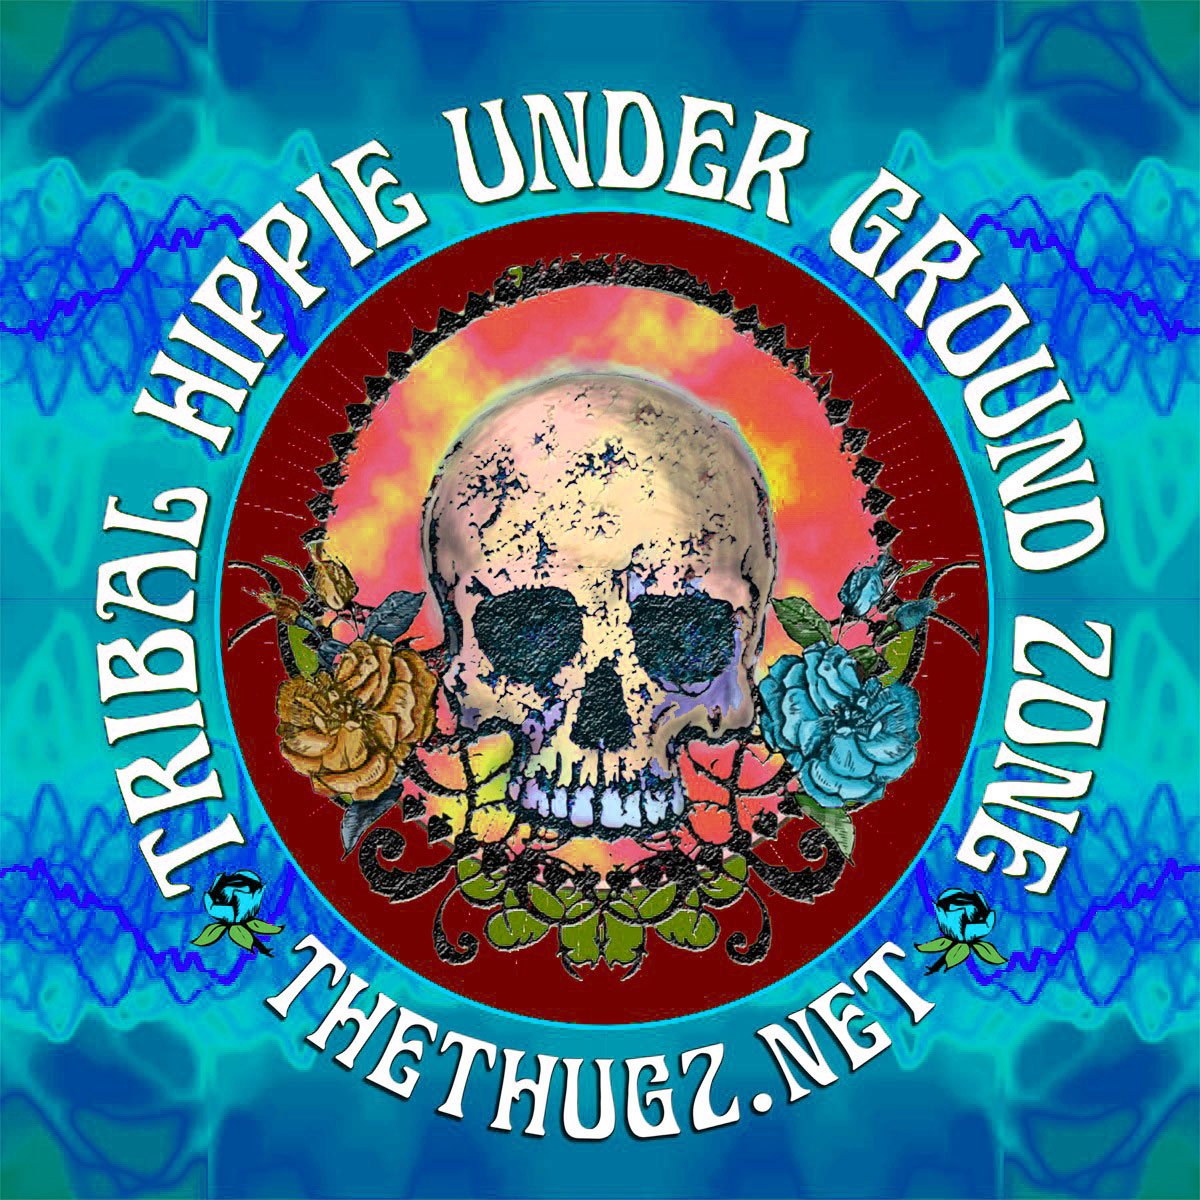 The THUGZ (tribal hippie underground zone) - Mike's Rants